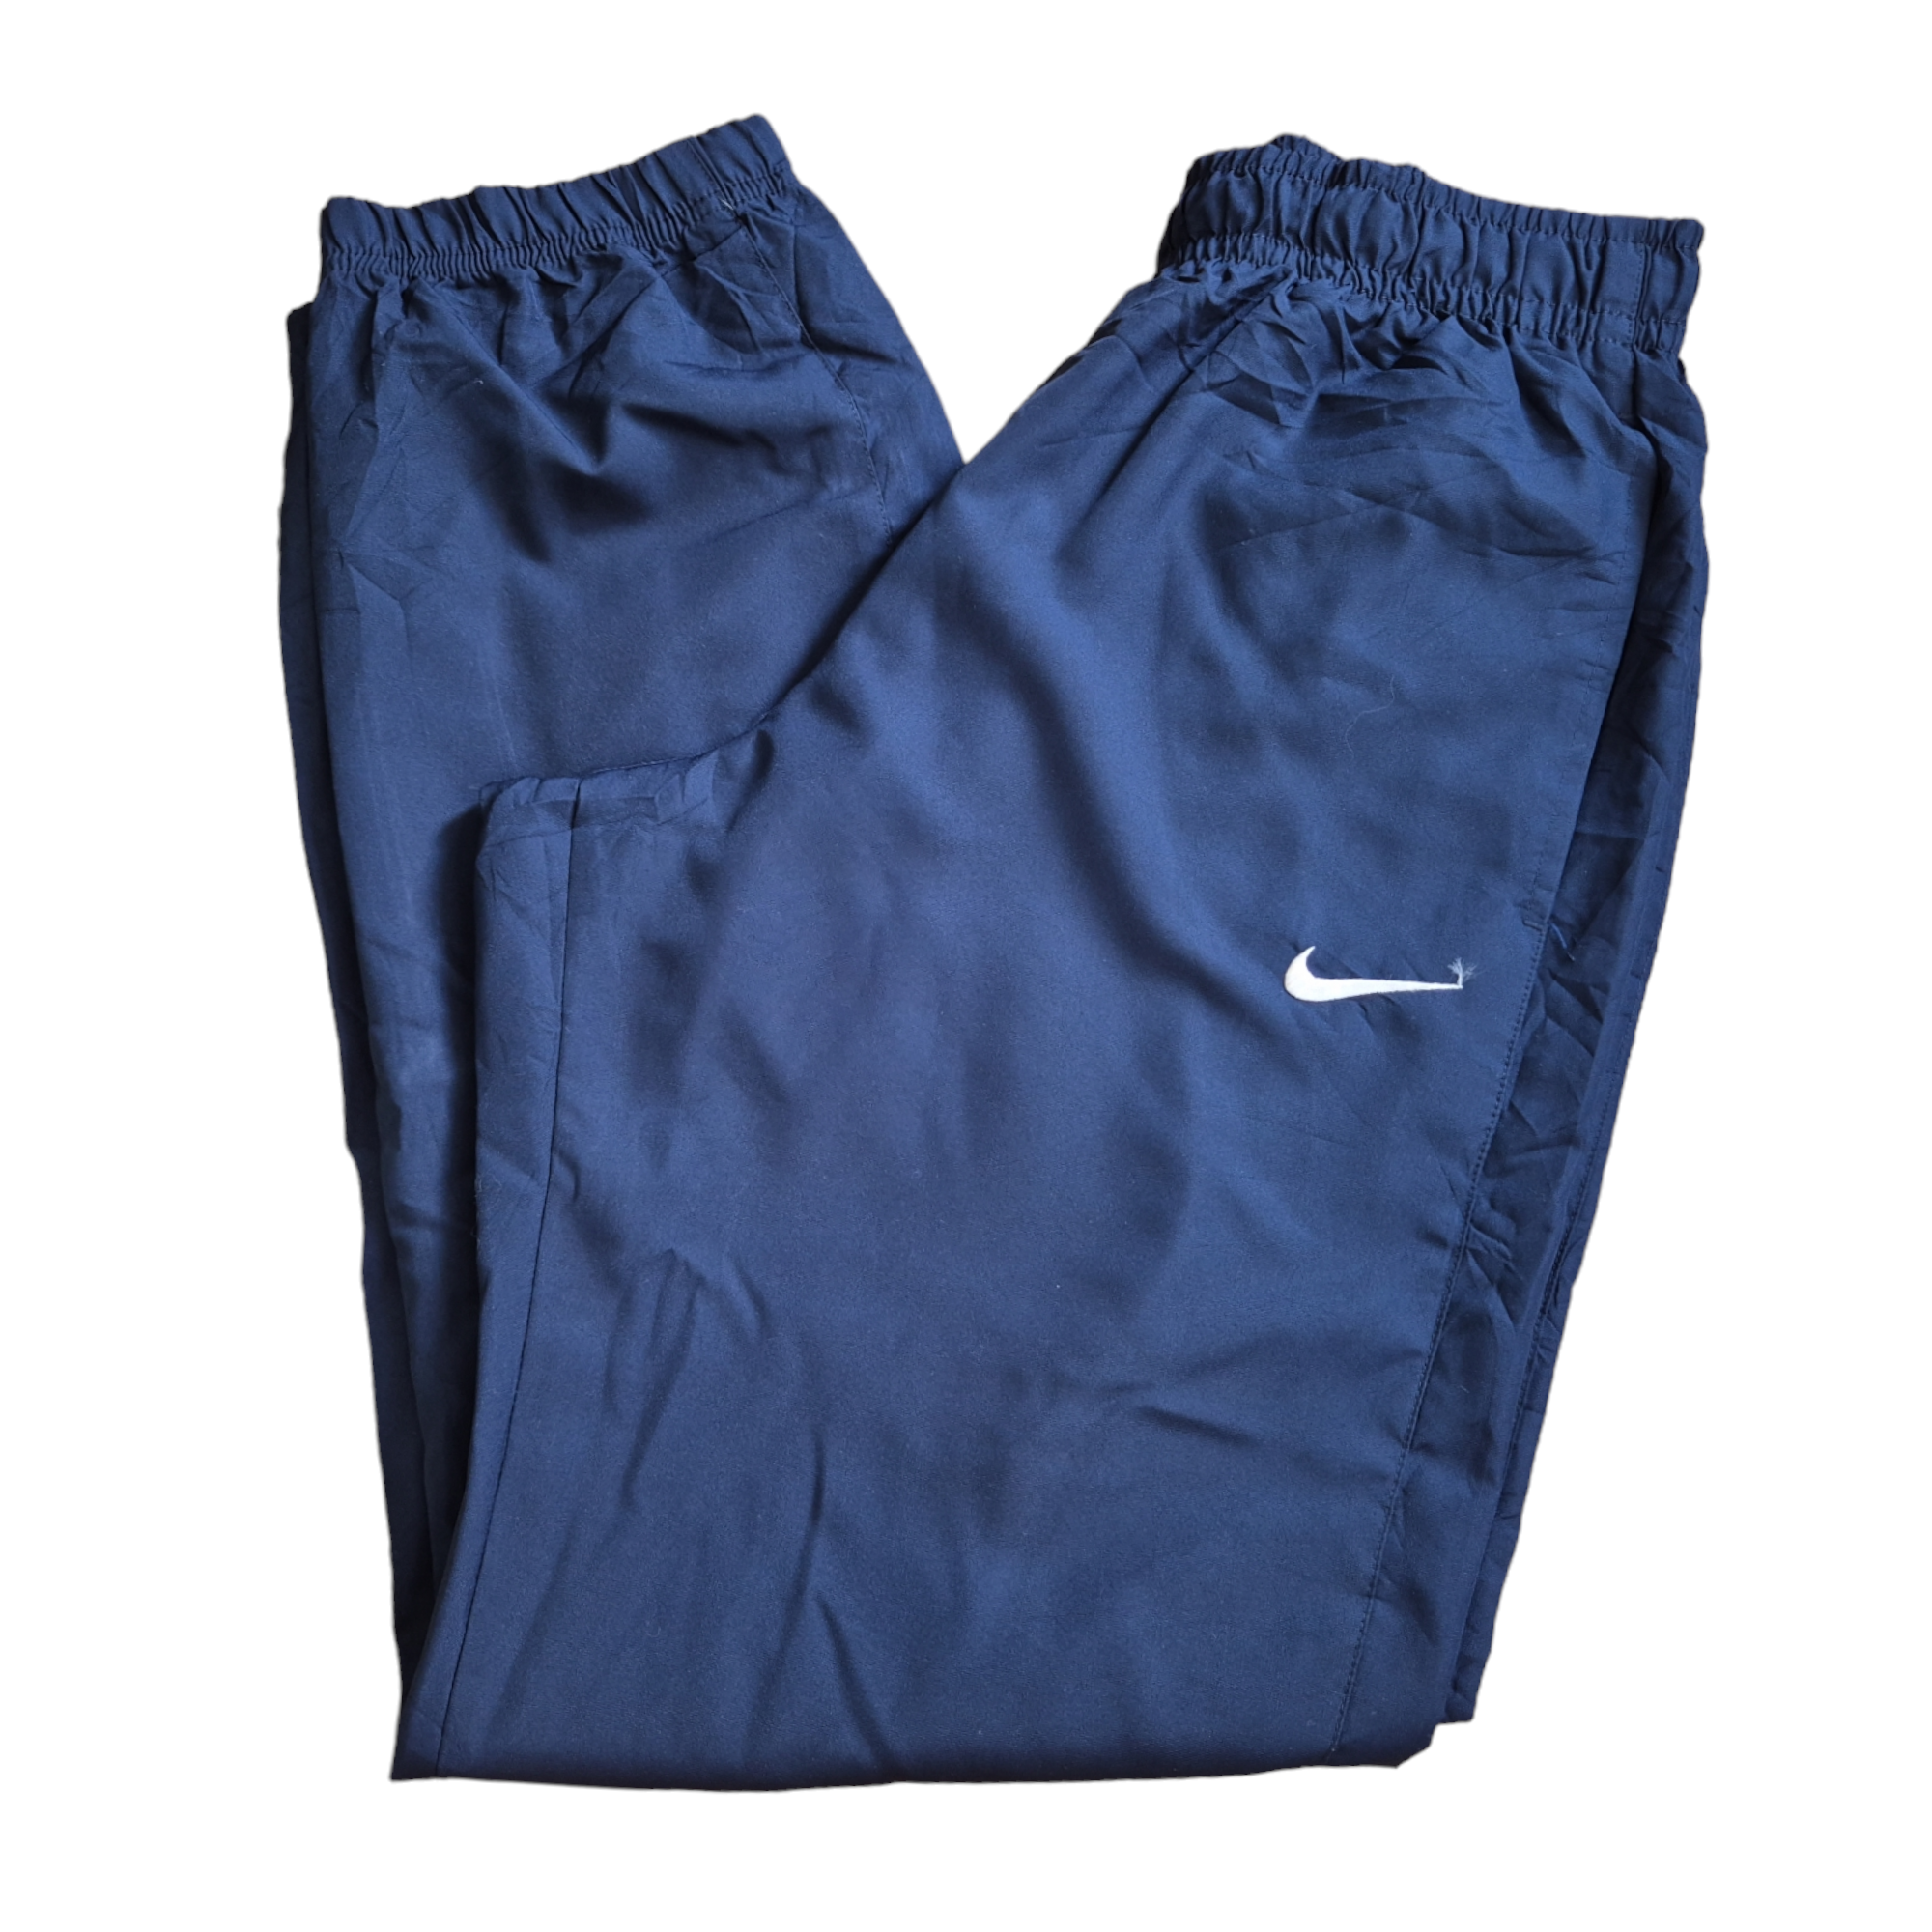 [S] Nike Trackpants